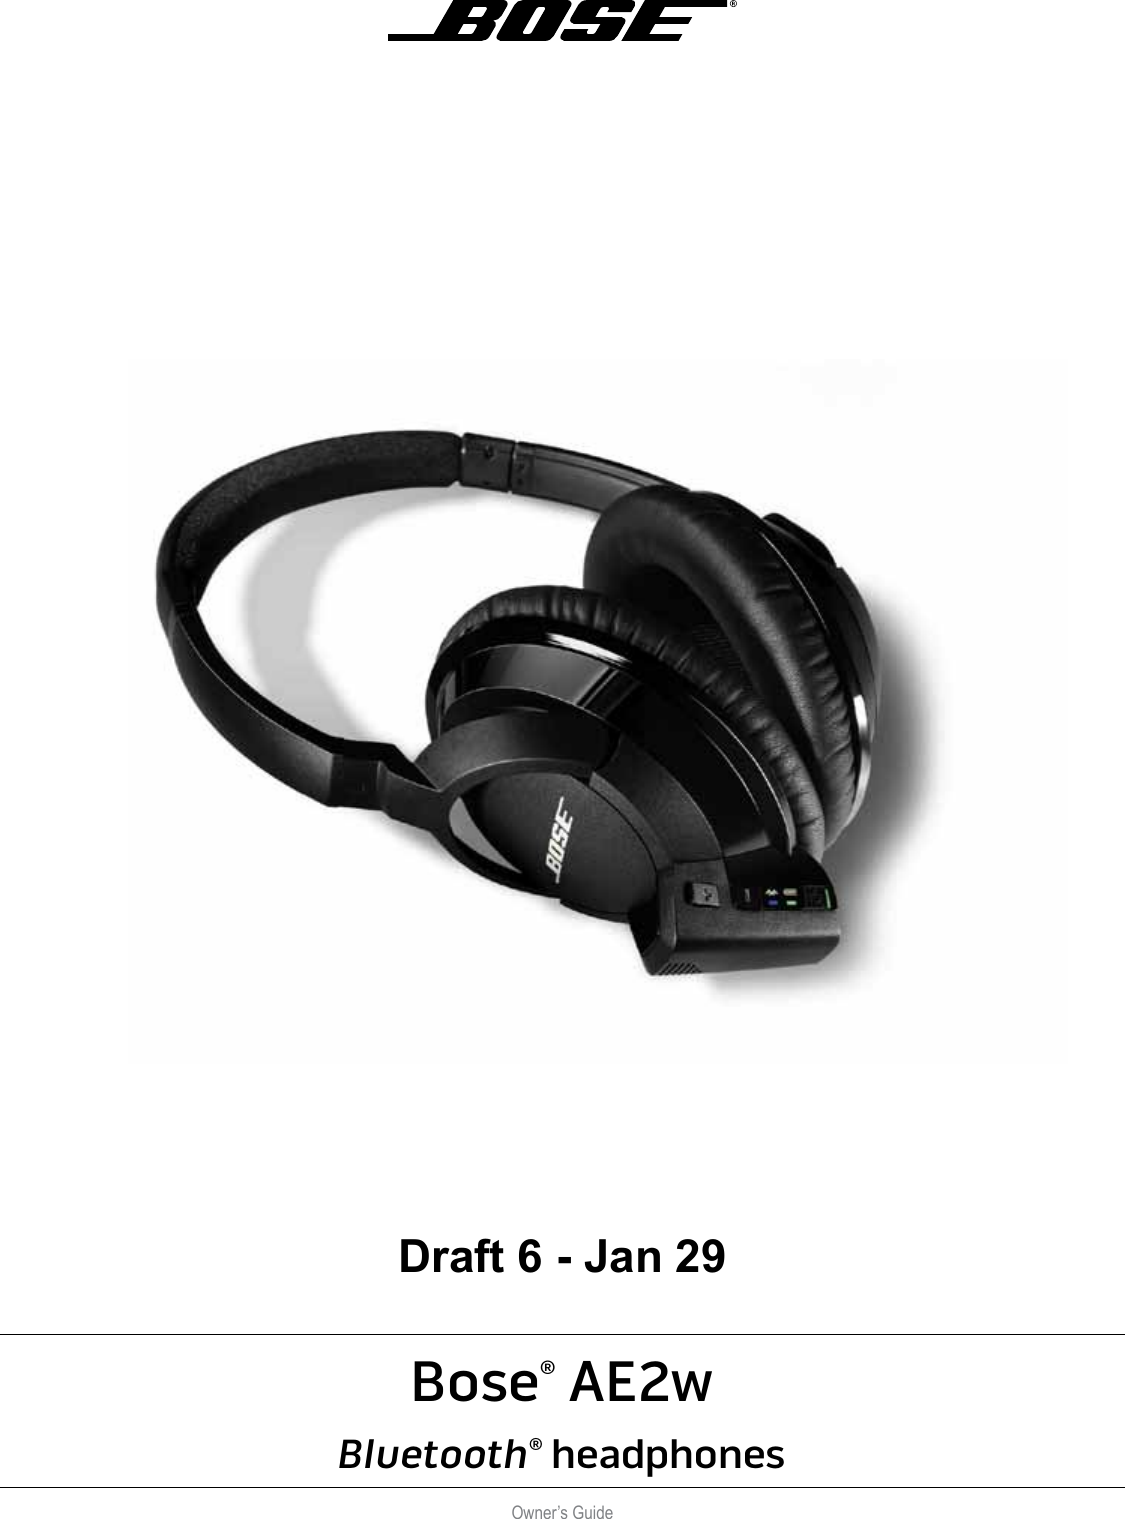 Bose® AE2wBluetooth® headphonesOwner’s GuideDraft 6 - Jan 29